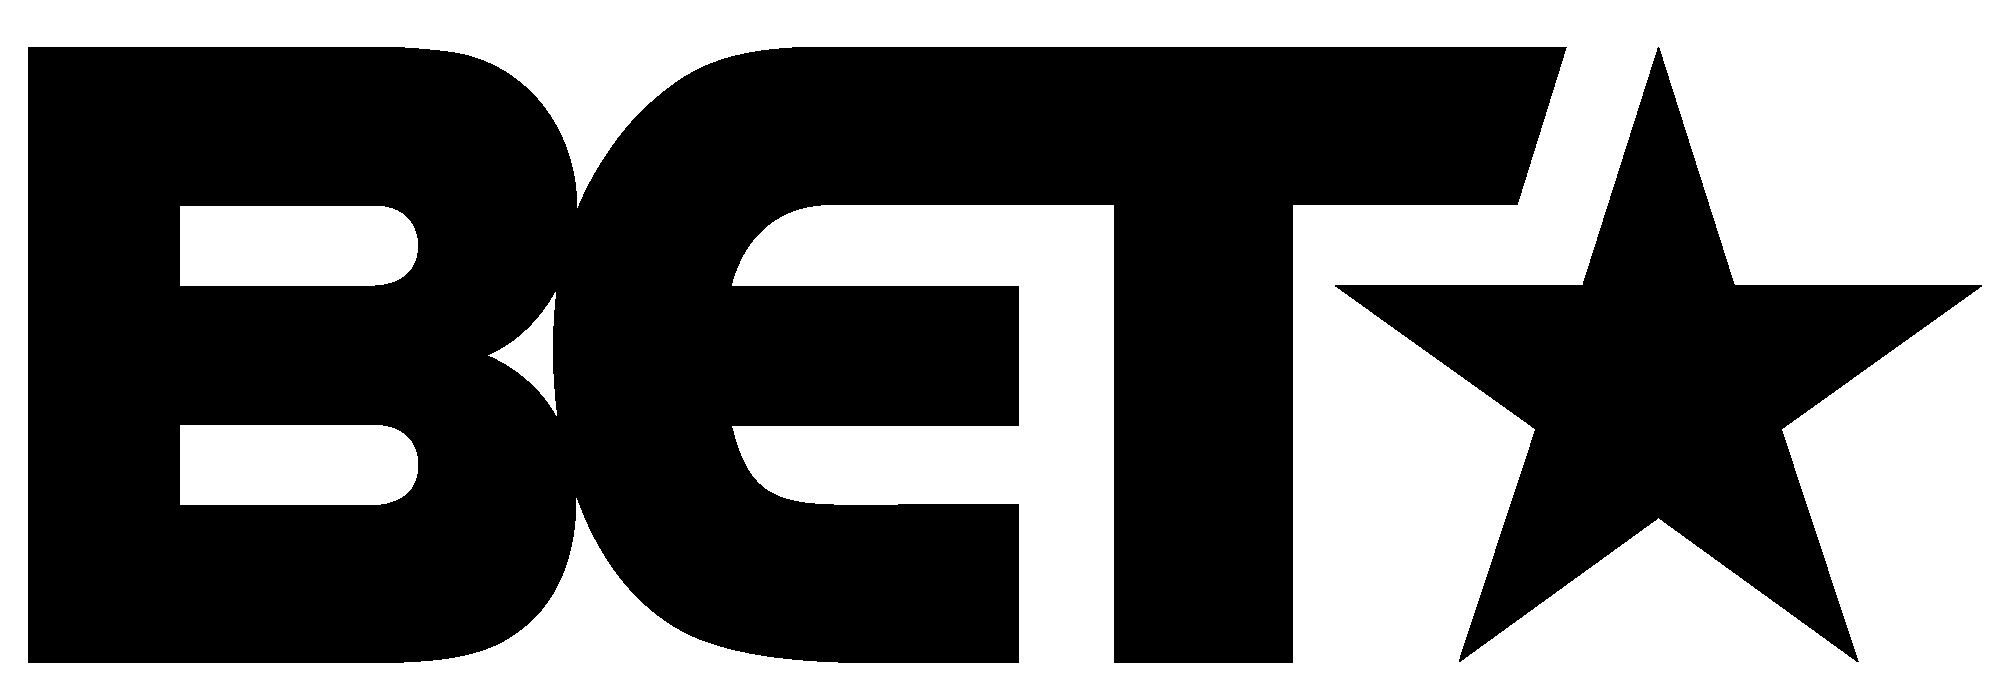 BET Logo.jpg